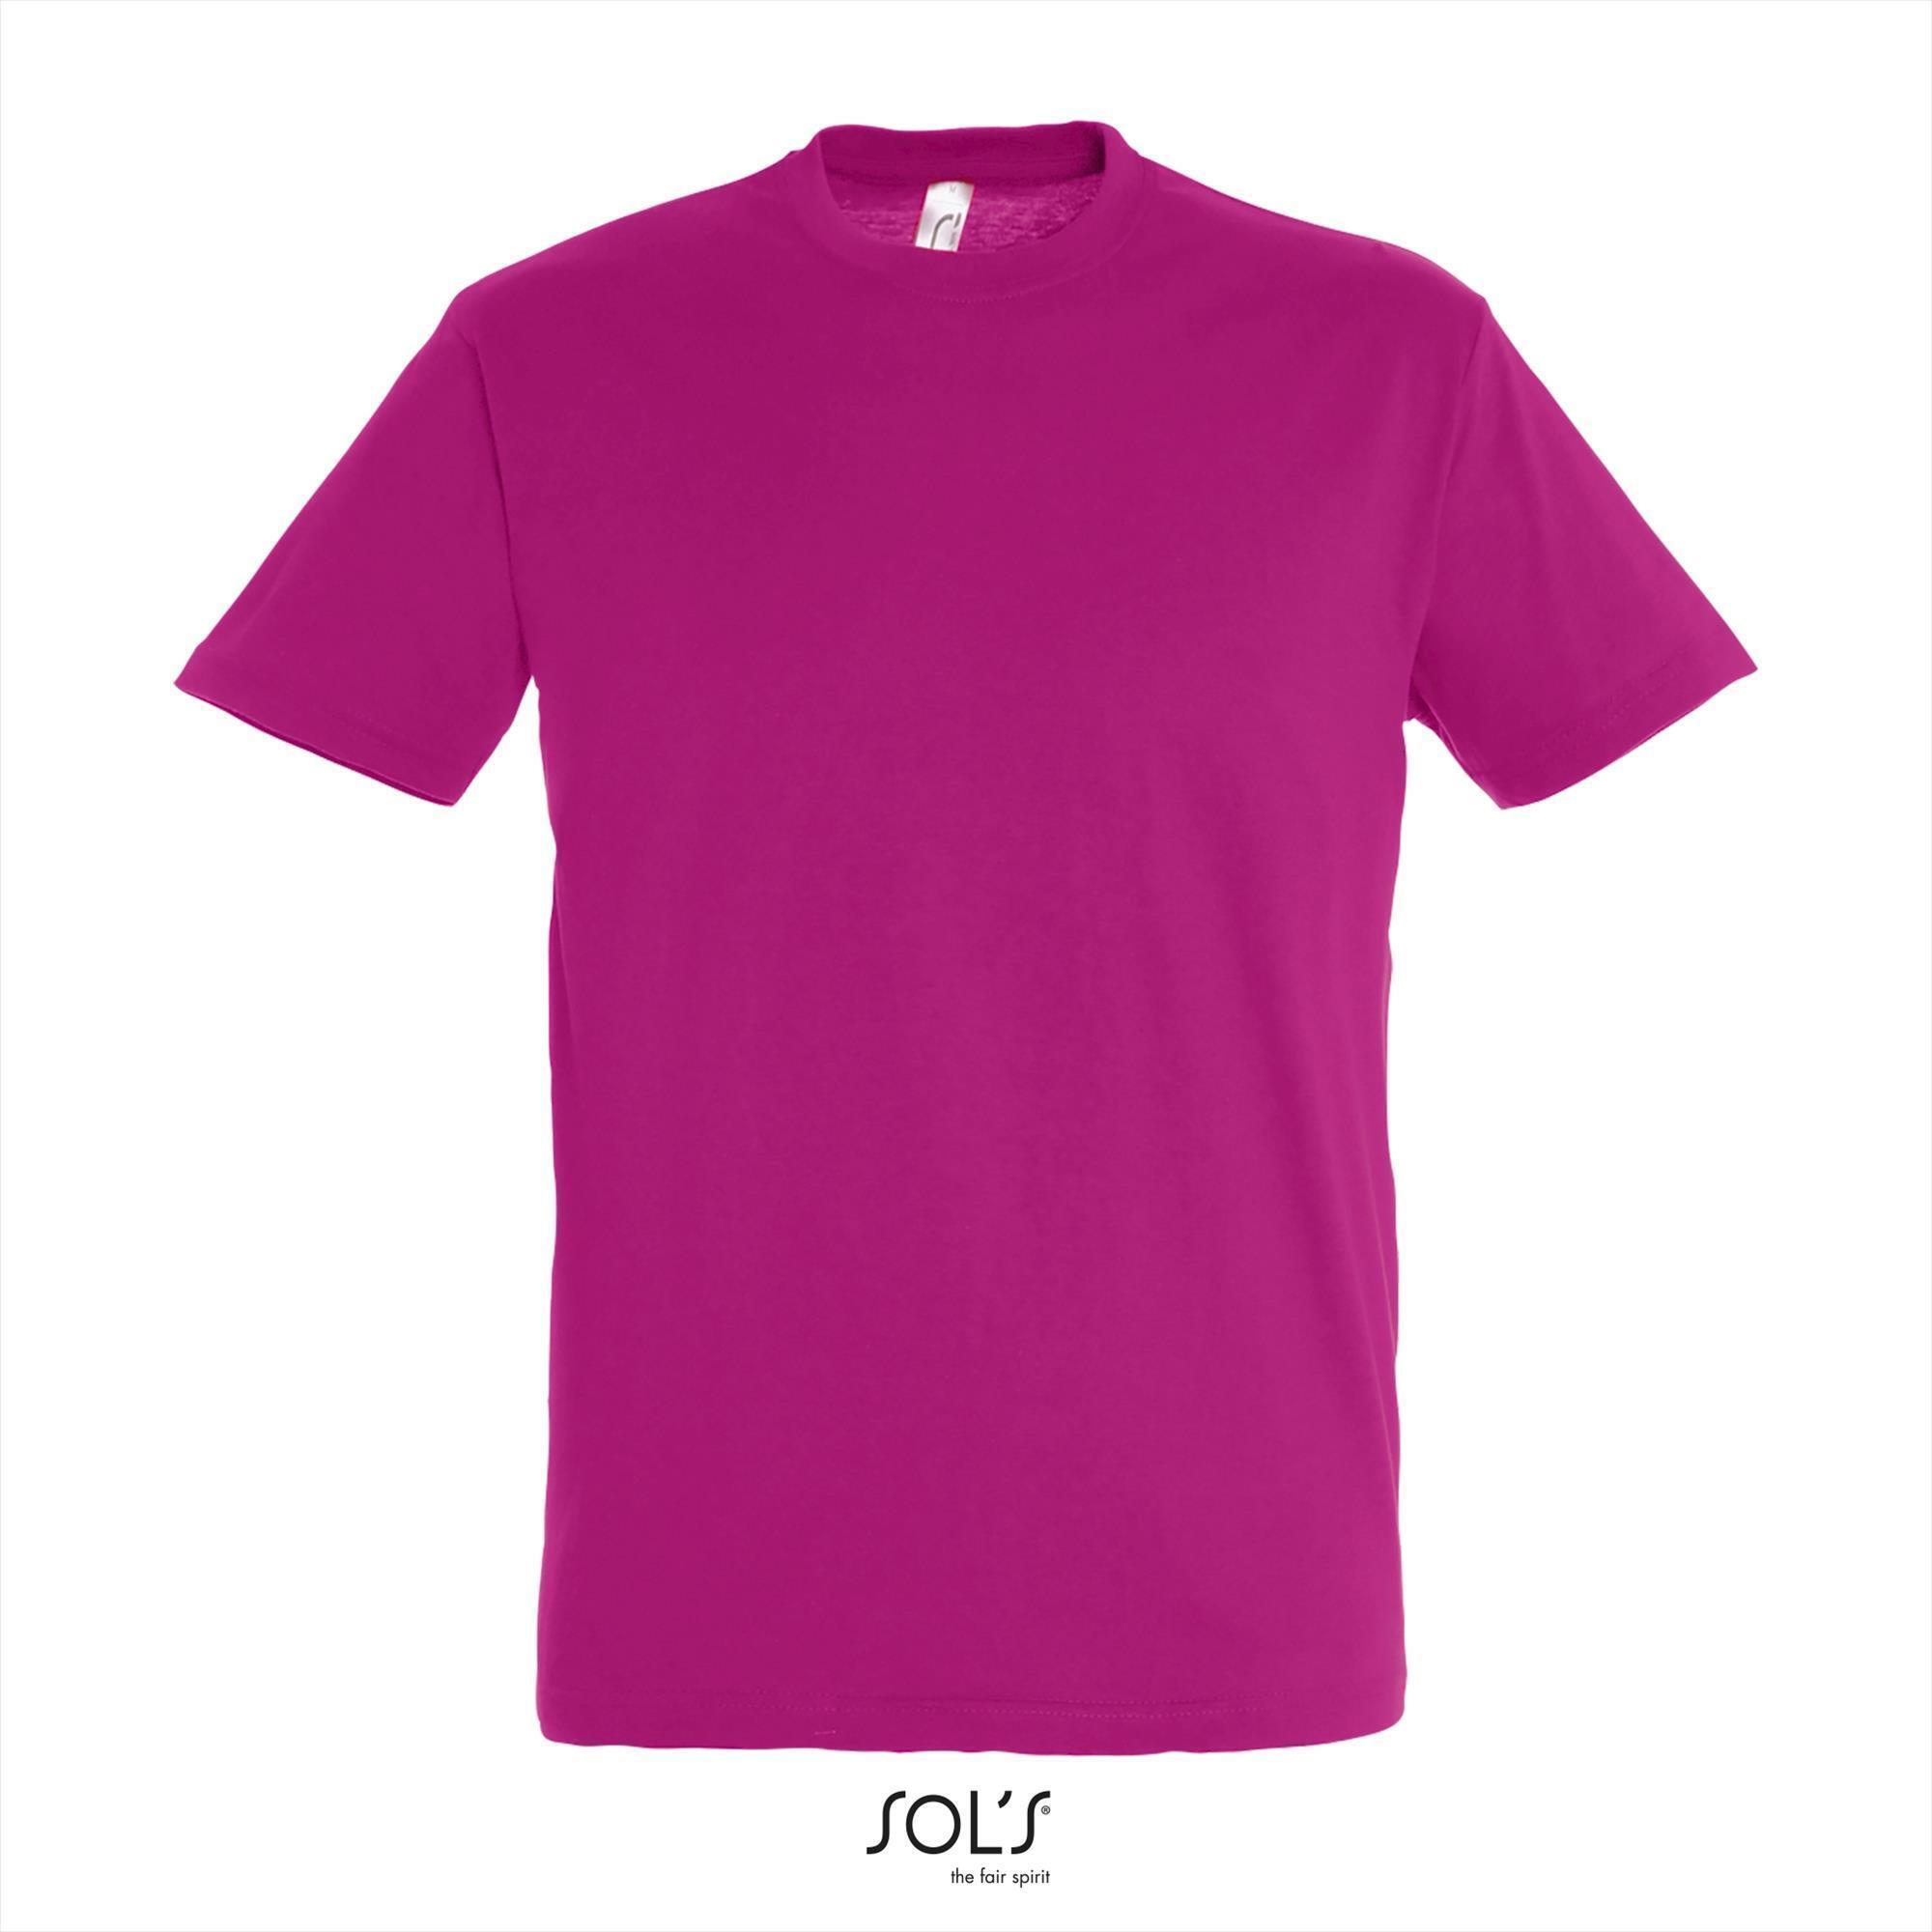 Heren T-shirt met een ronde hals mannen shirt fuchsia roze